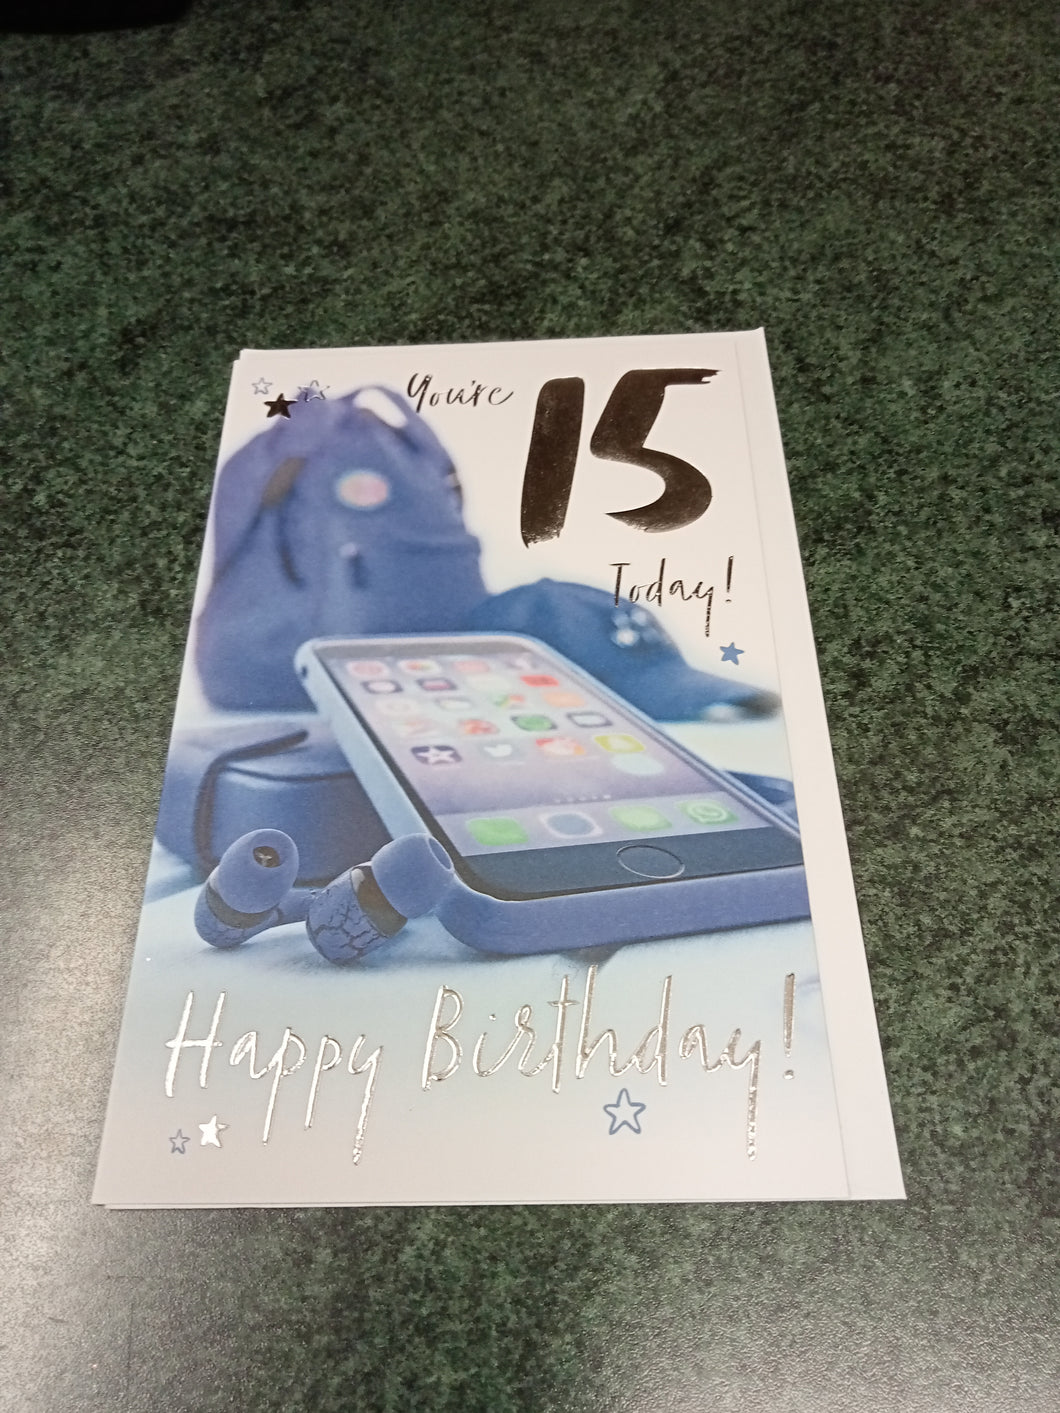 You're 15 today! Happy Birthday!